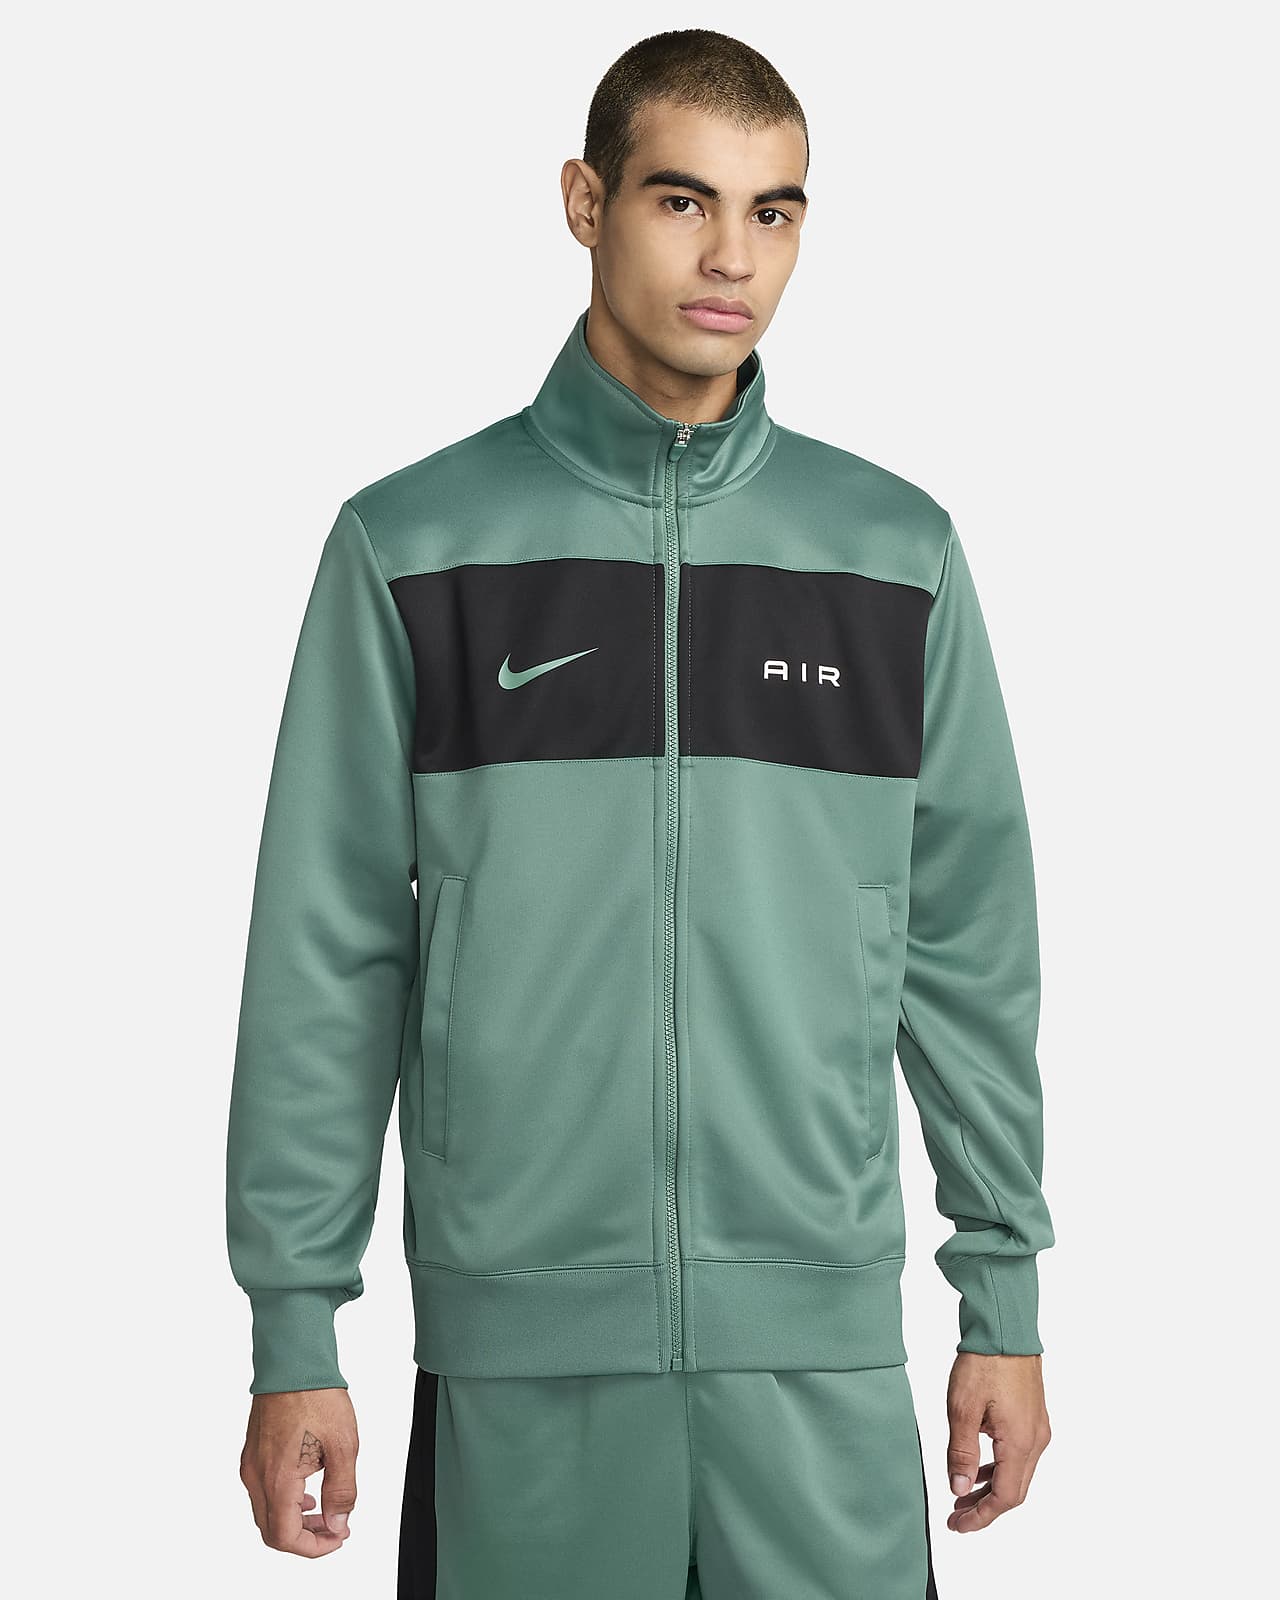 Track jacket Nike Air – Uomo